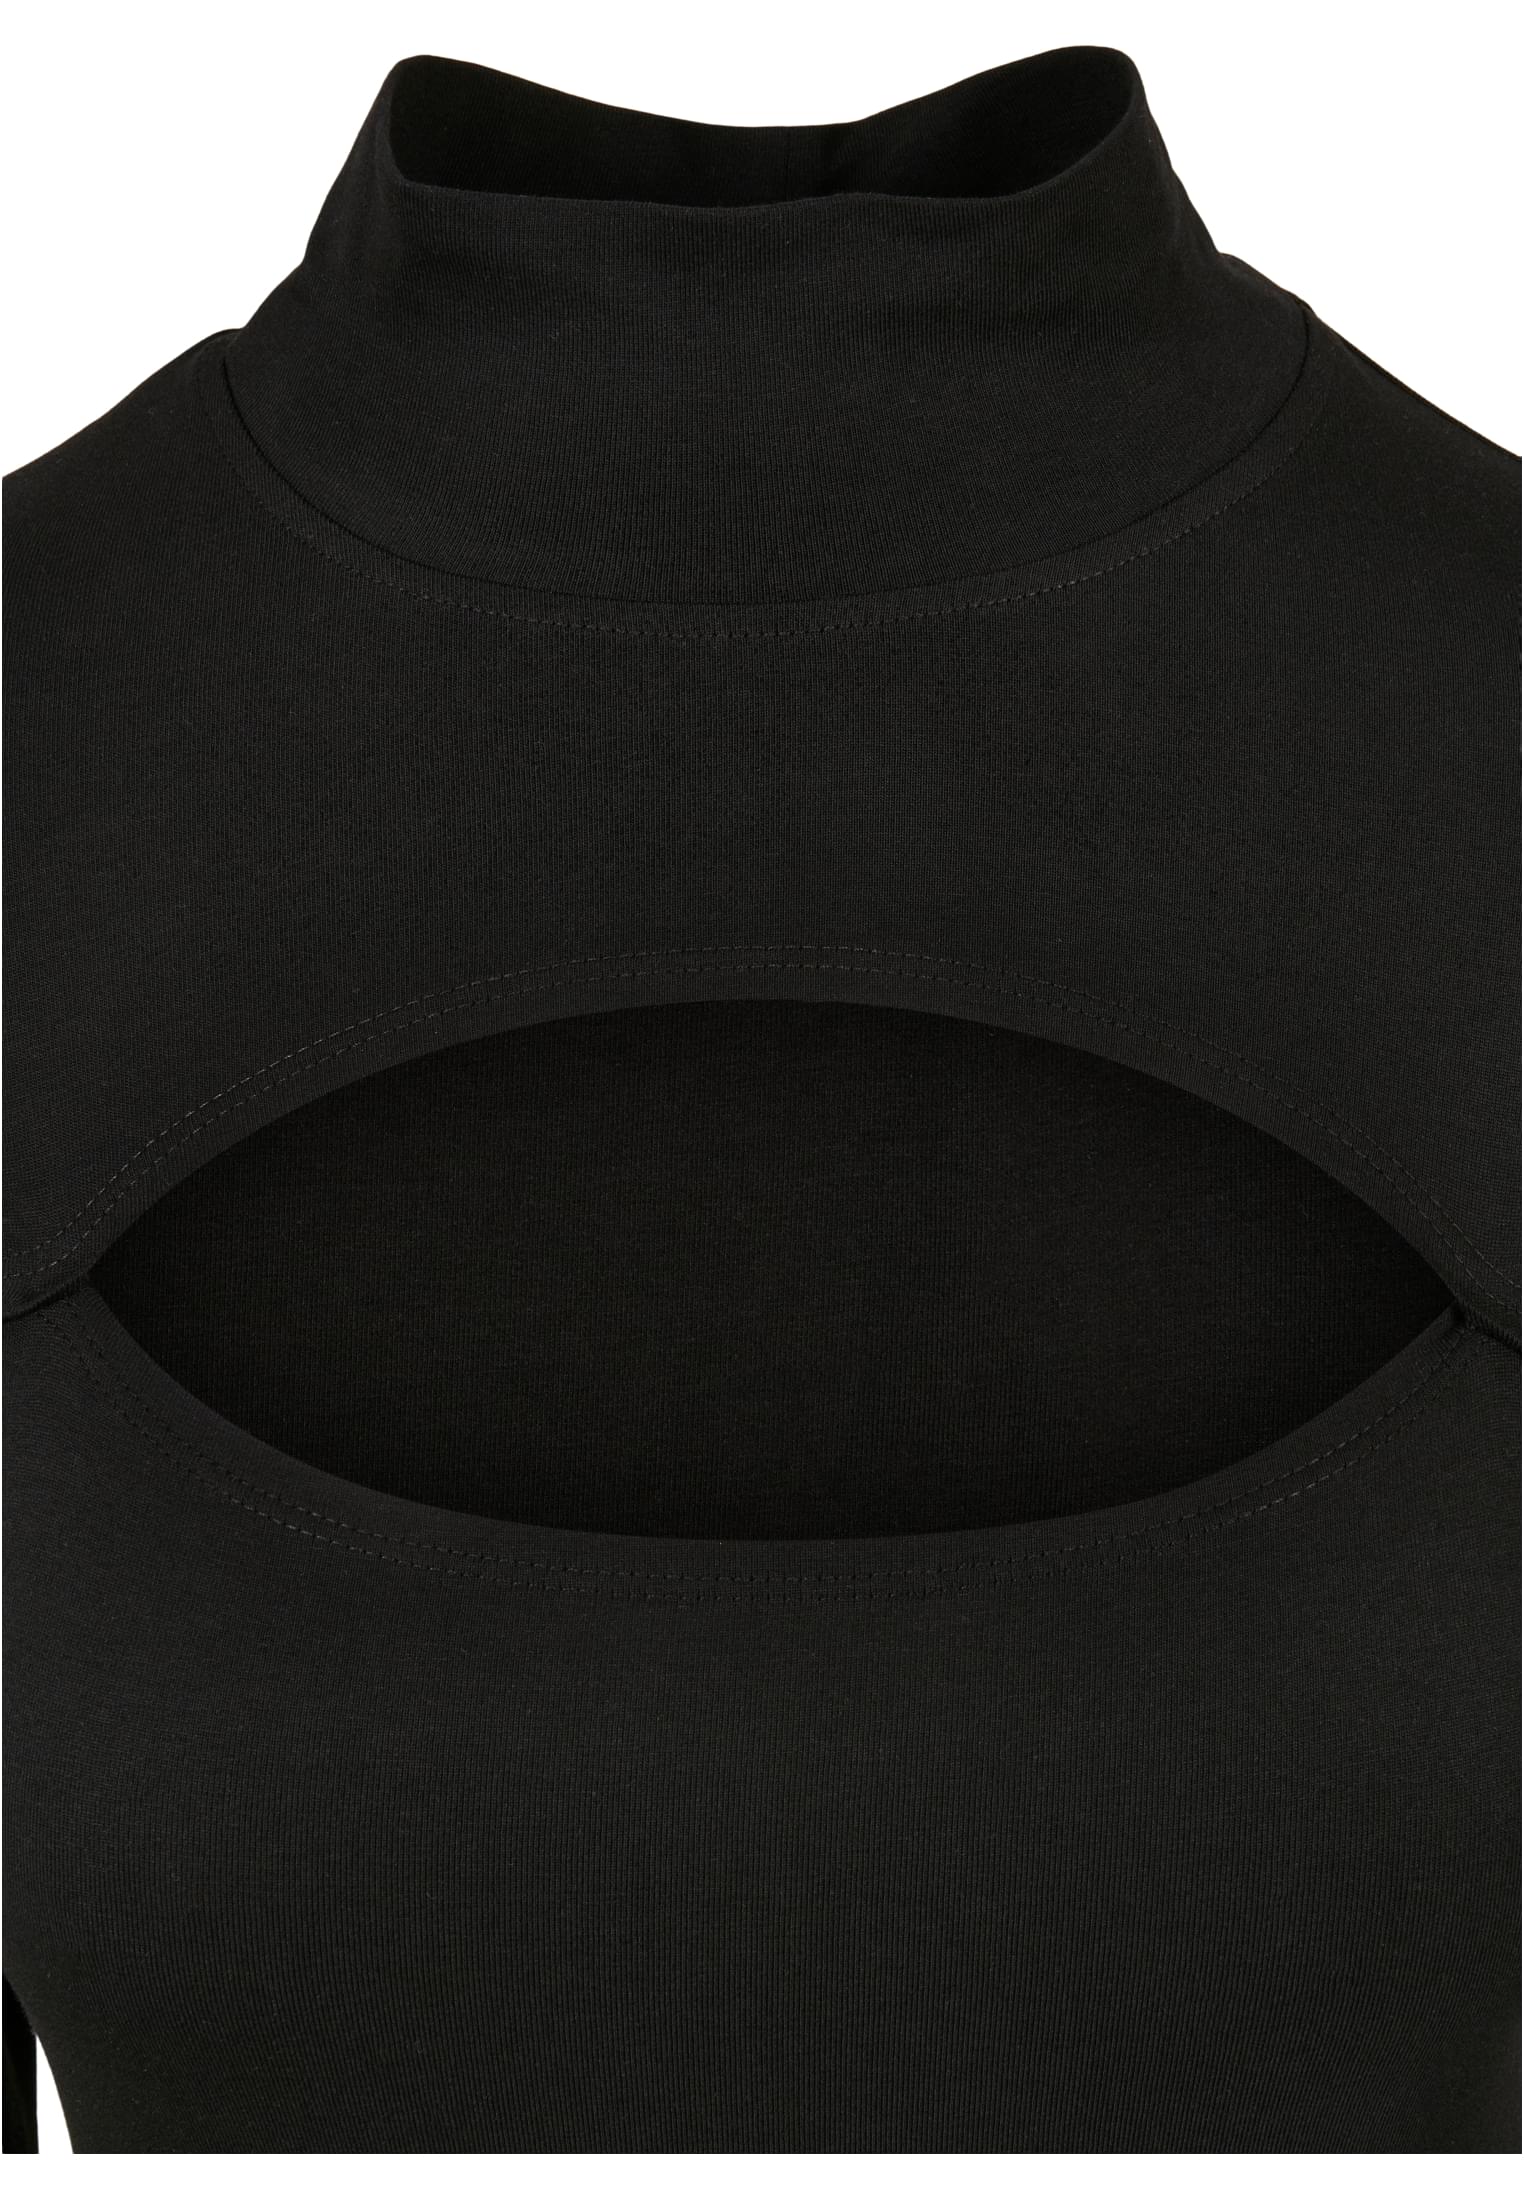 Kleider & R?cke Ladies Stretch Jersey Cut-Out Turtleneck Dress in Farbe black